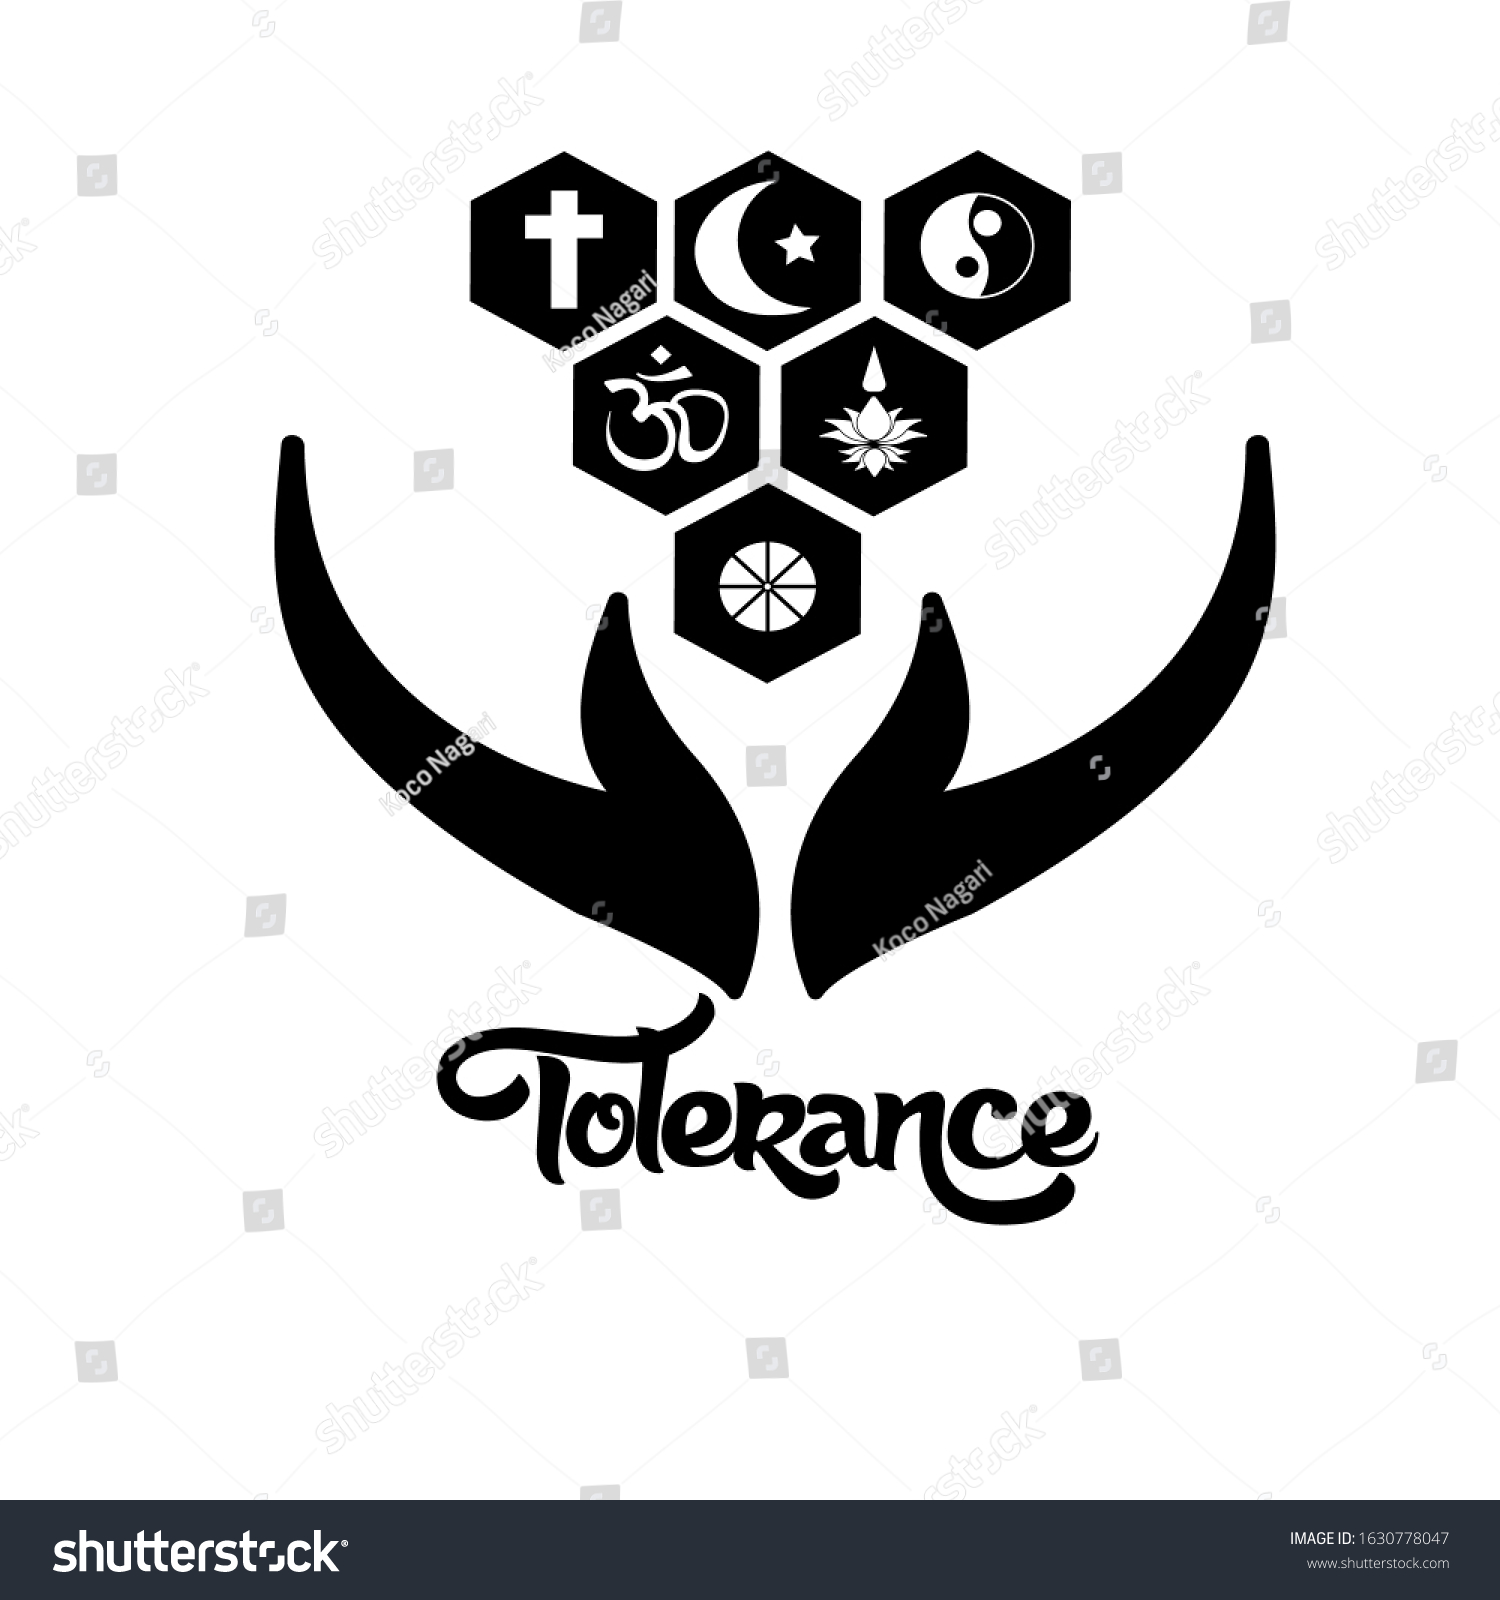 tolerance symbol